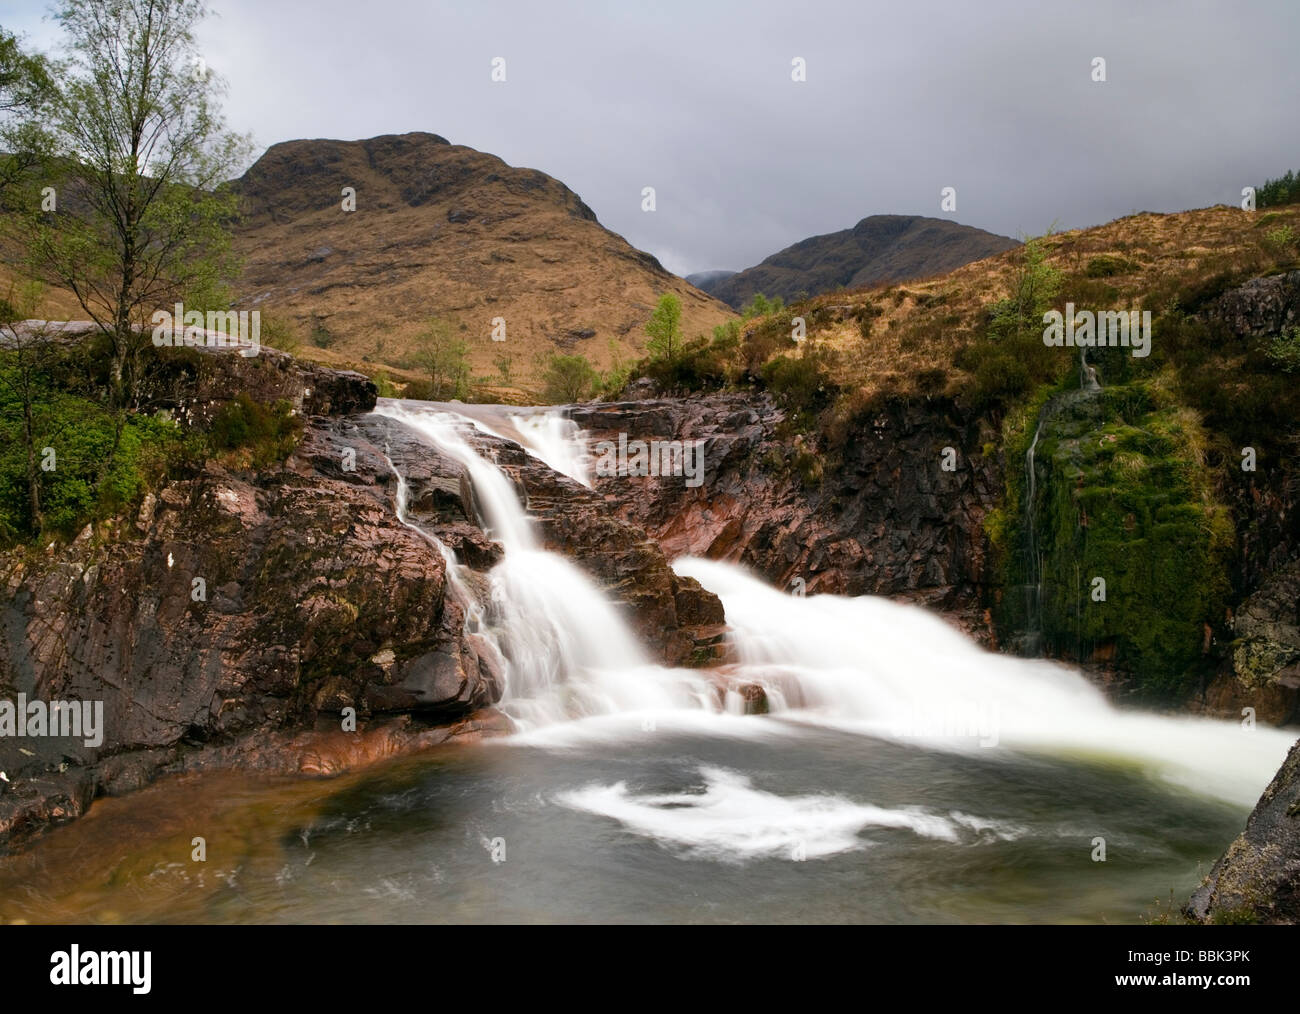 Waterfall in glen etive, Scotland. Stock Photo